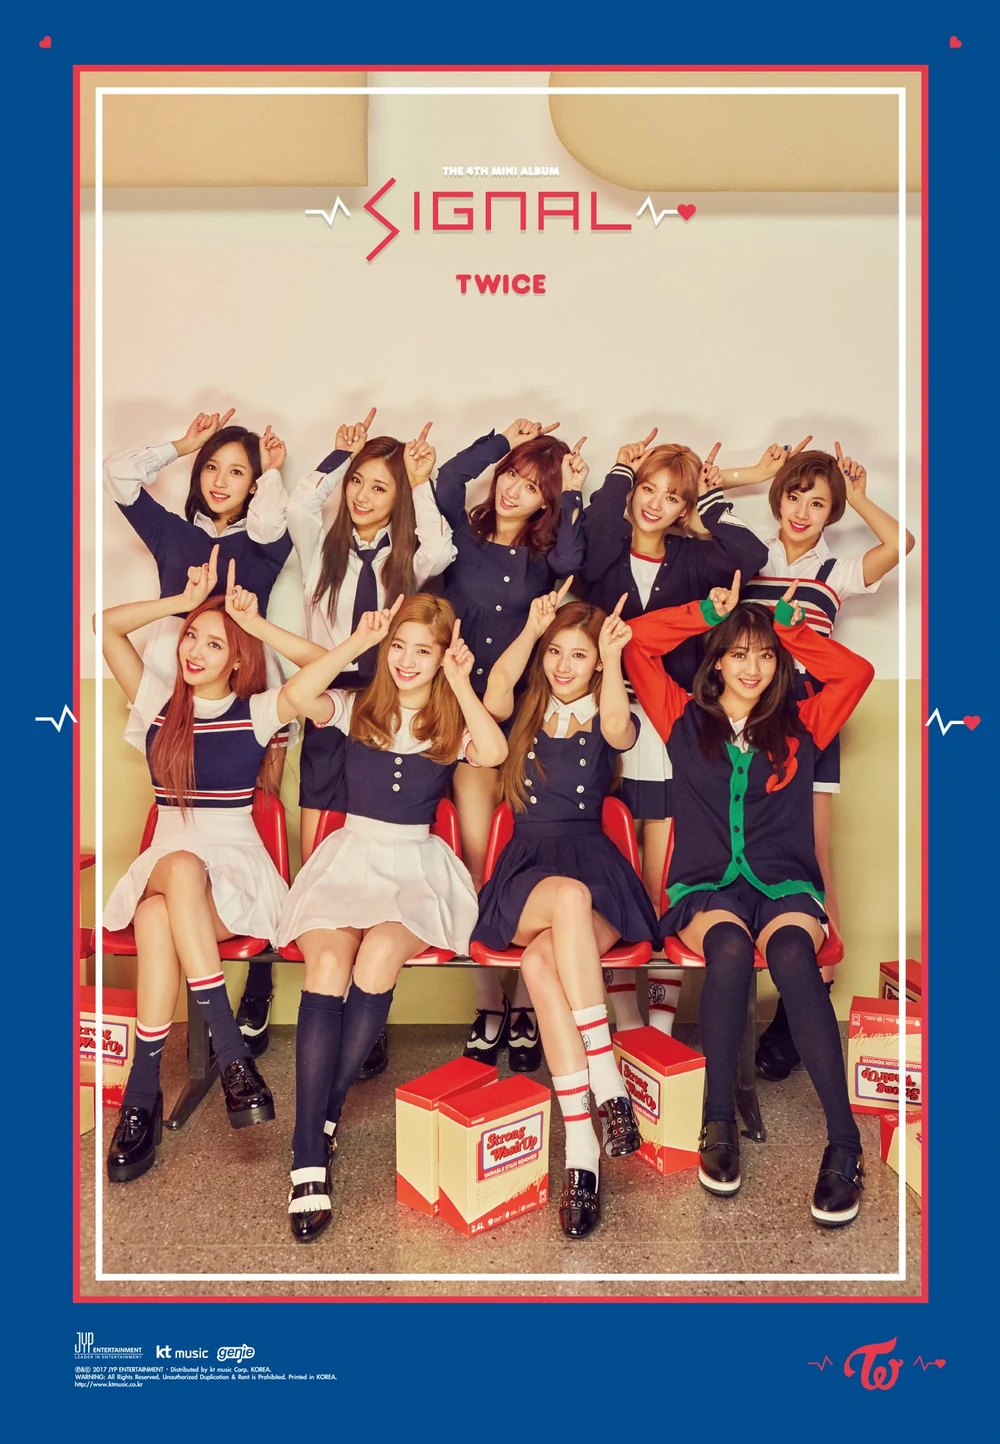 Twice Signal Group Concept Teaser Picture Image Photo Kpop K-Concept 2